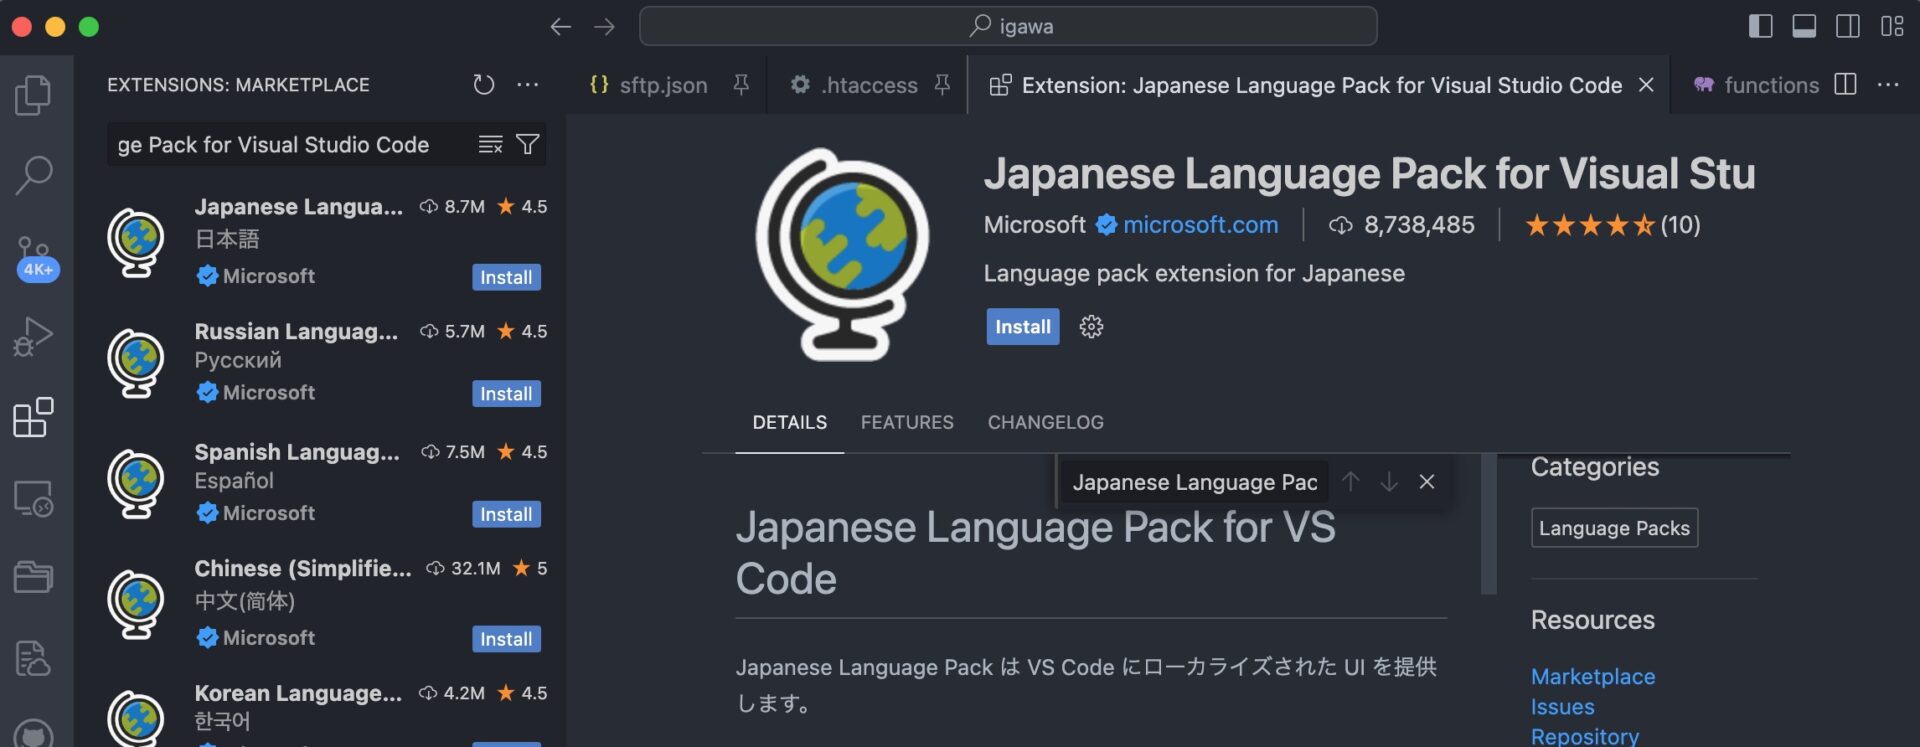 Japanese Language Pack for Visual Studio Codeの画面。